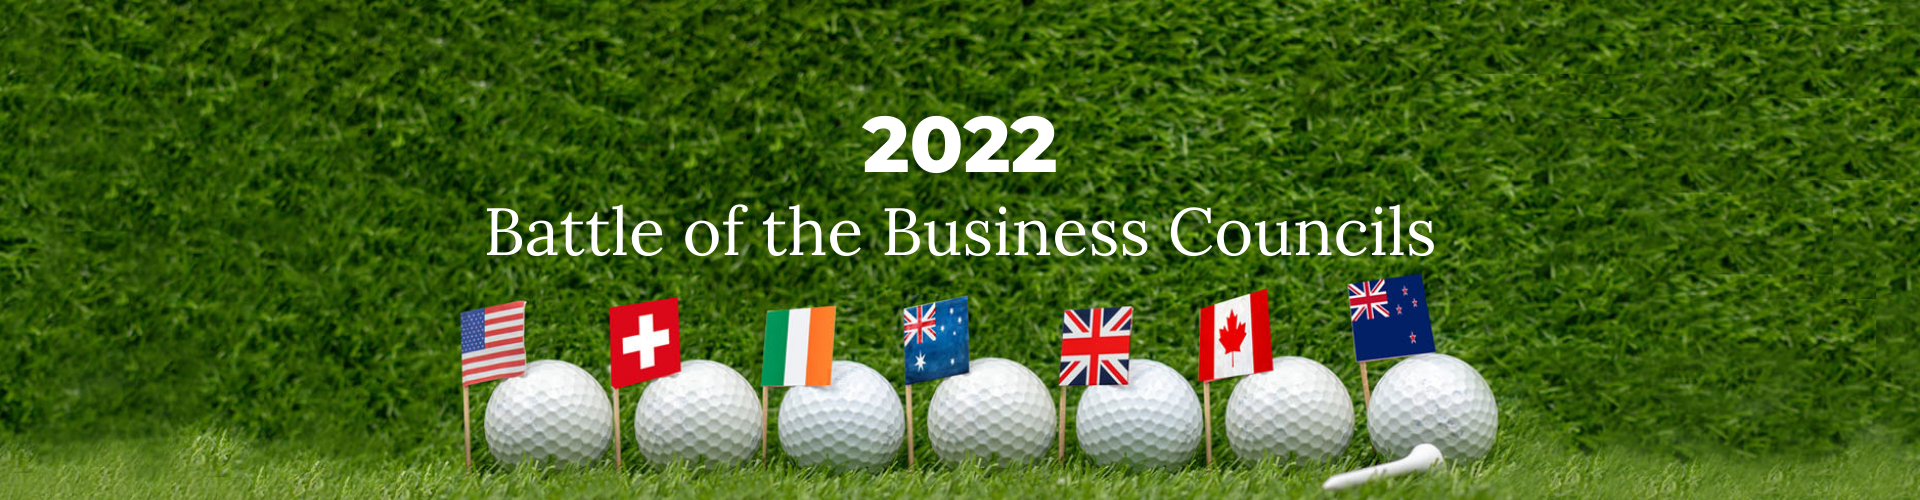 thumbnails Battle of The Business Councils 2022- Golf Tournament